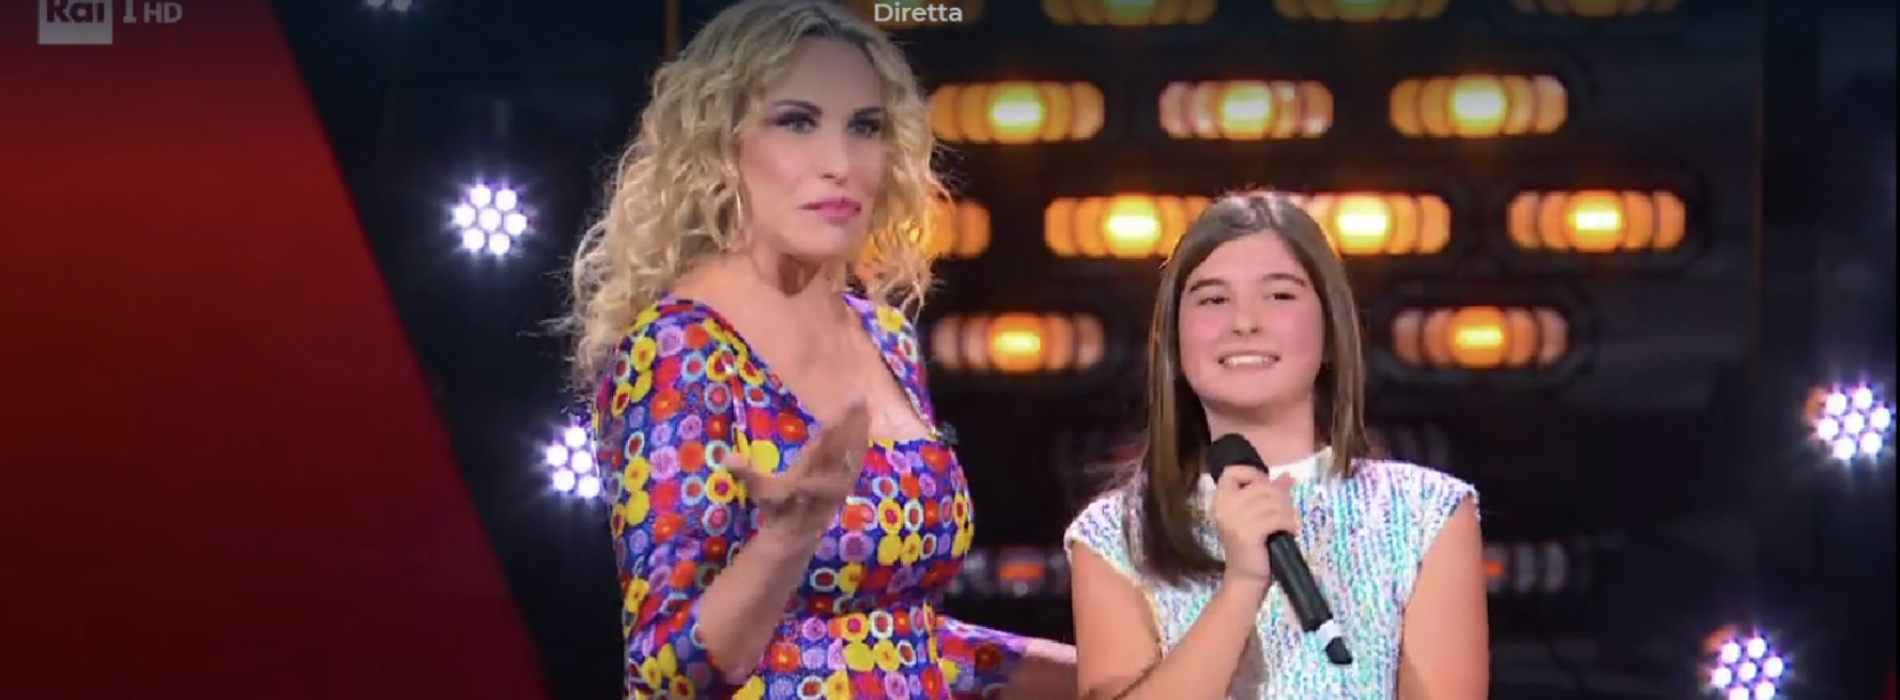 The Voice Kids in Italia, Lorena porta Marcianise su RaiUno